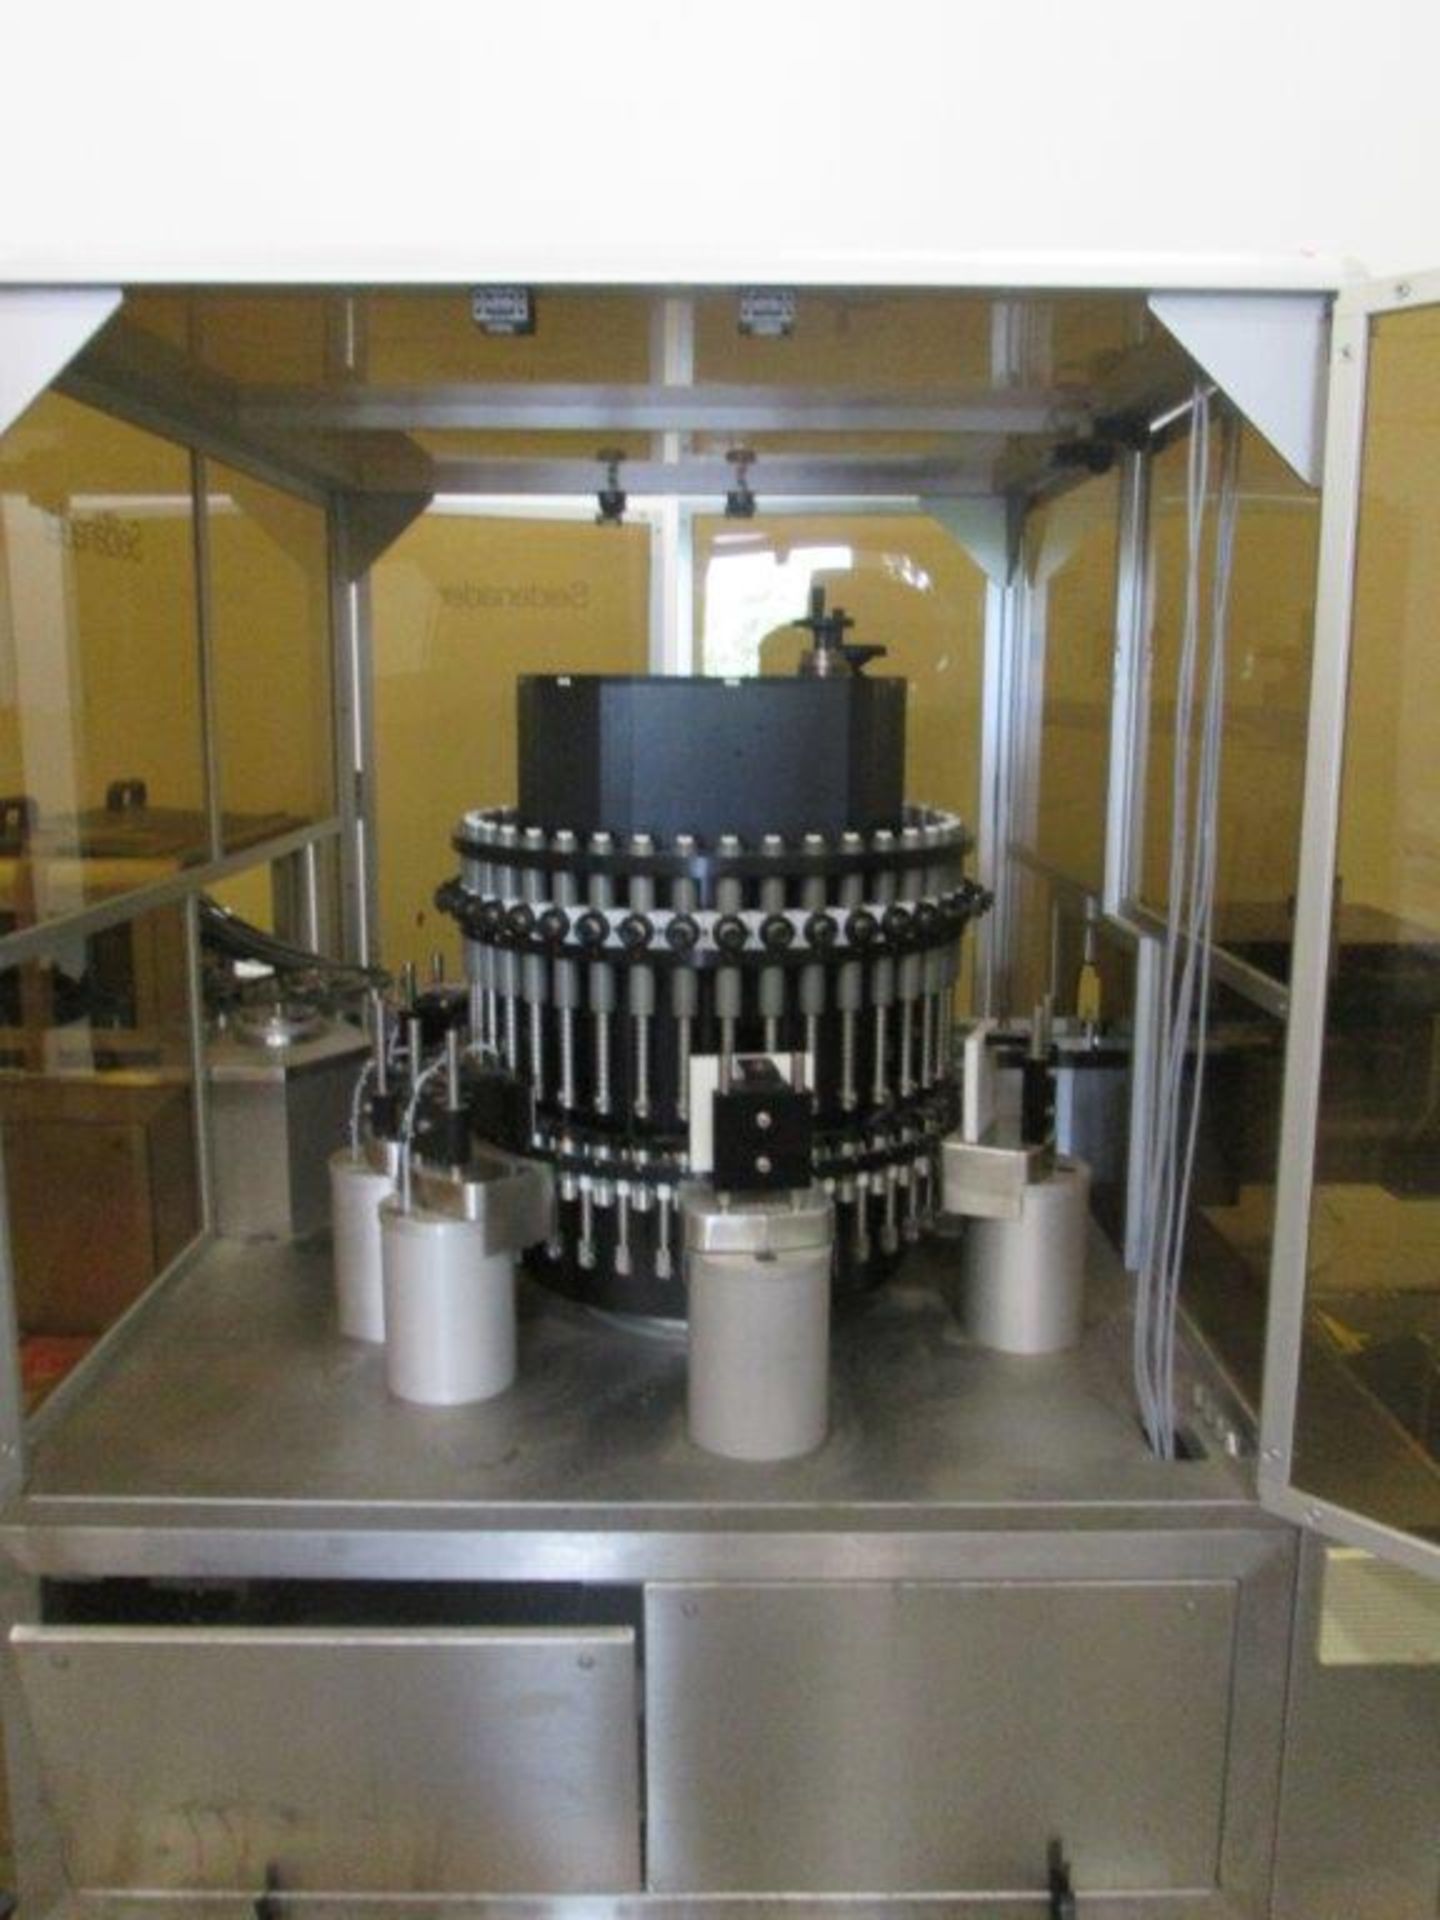 Seidenader LI-40 Automatic Vial Inspection Machine - Image 13 of 16